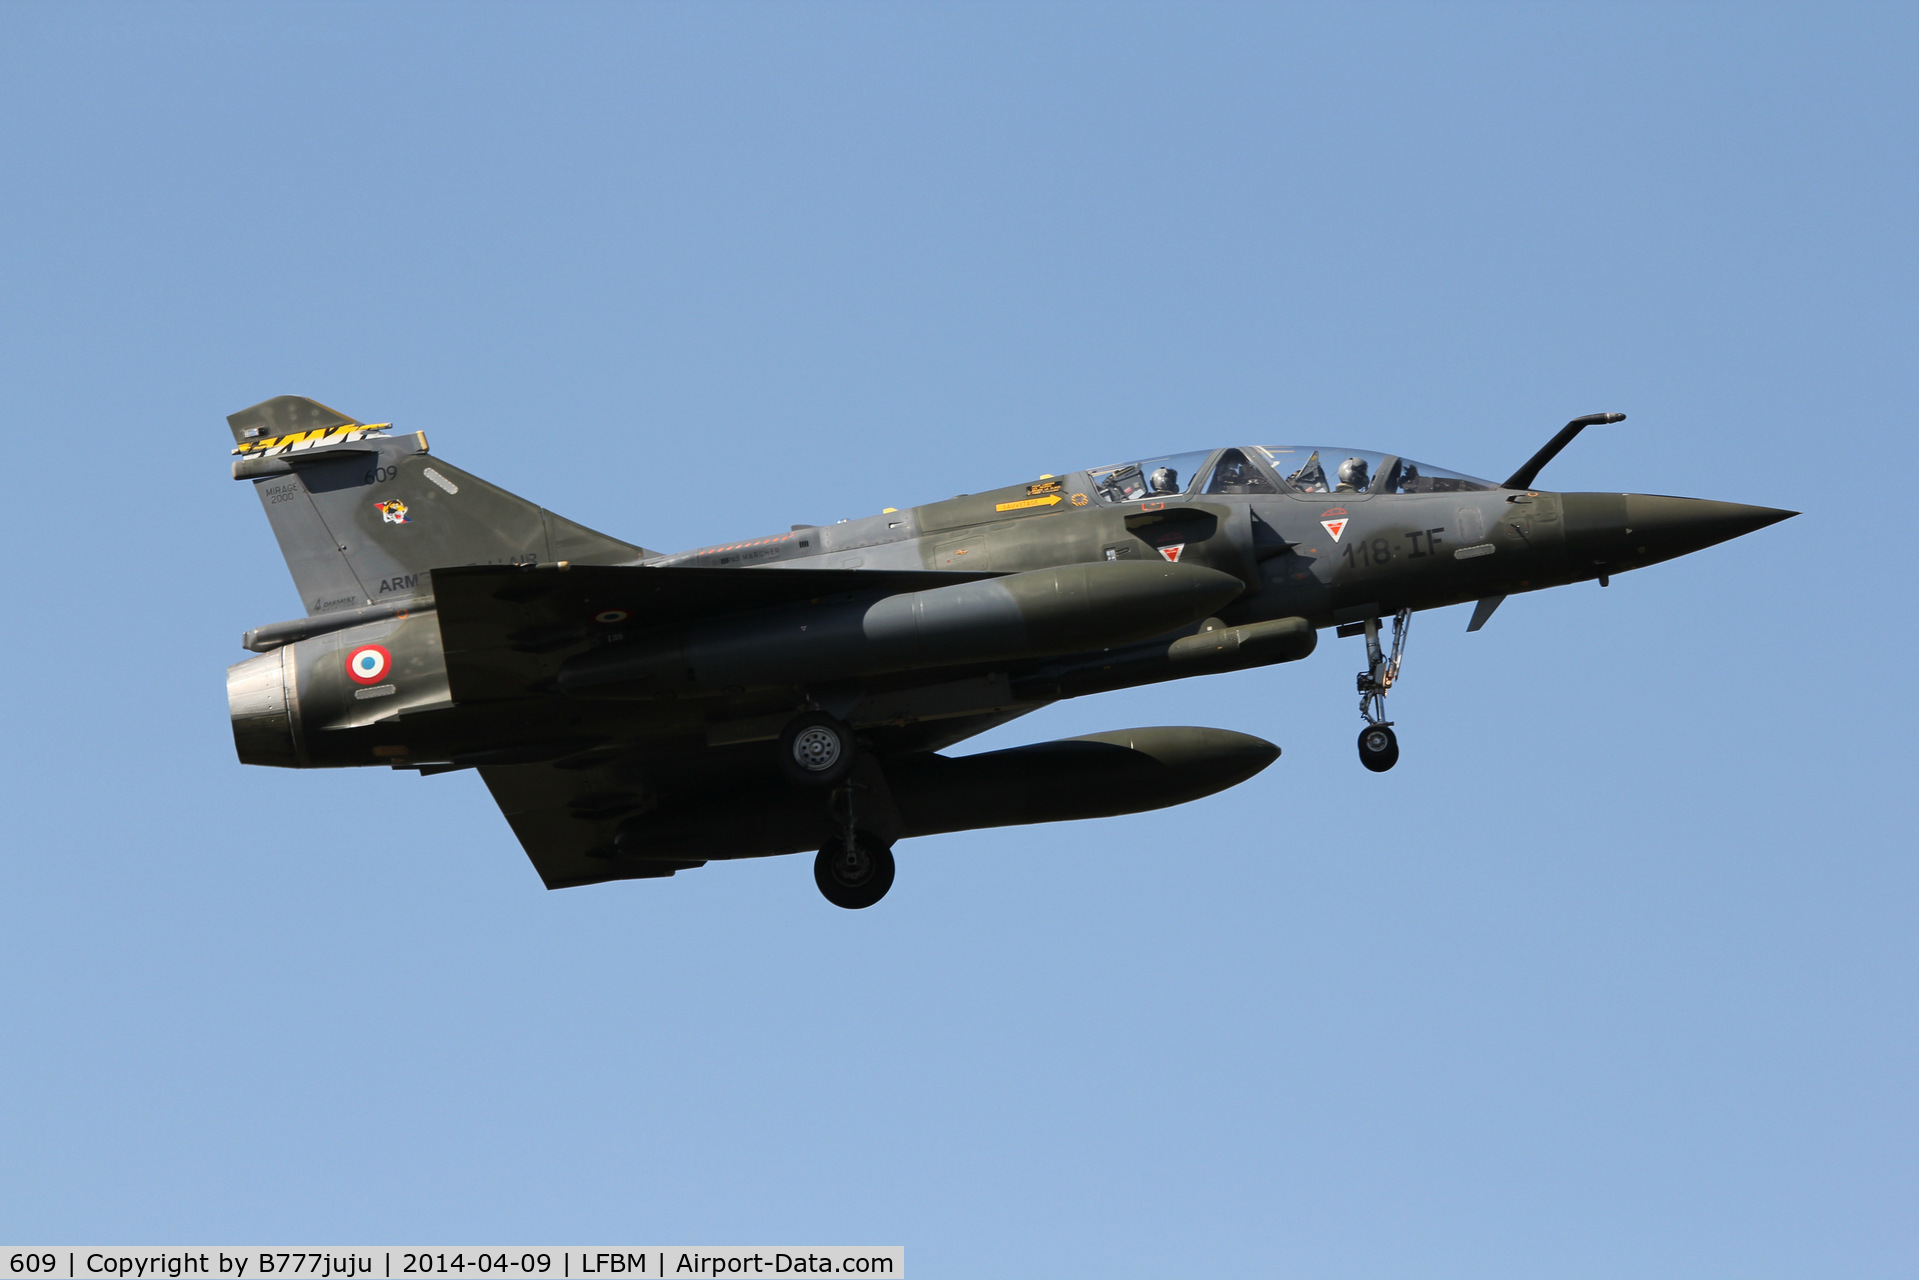 609, Dassault Mirage 2000D C/N 403, on landing at Mont de Marsant